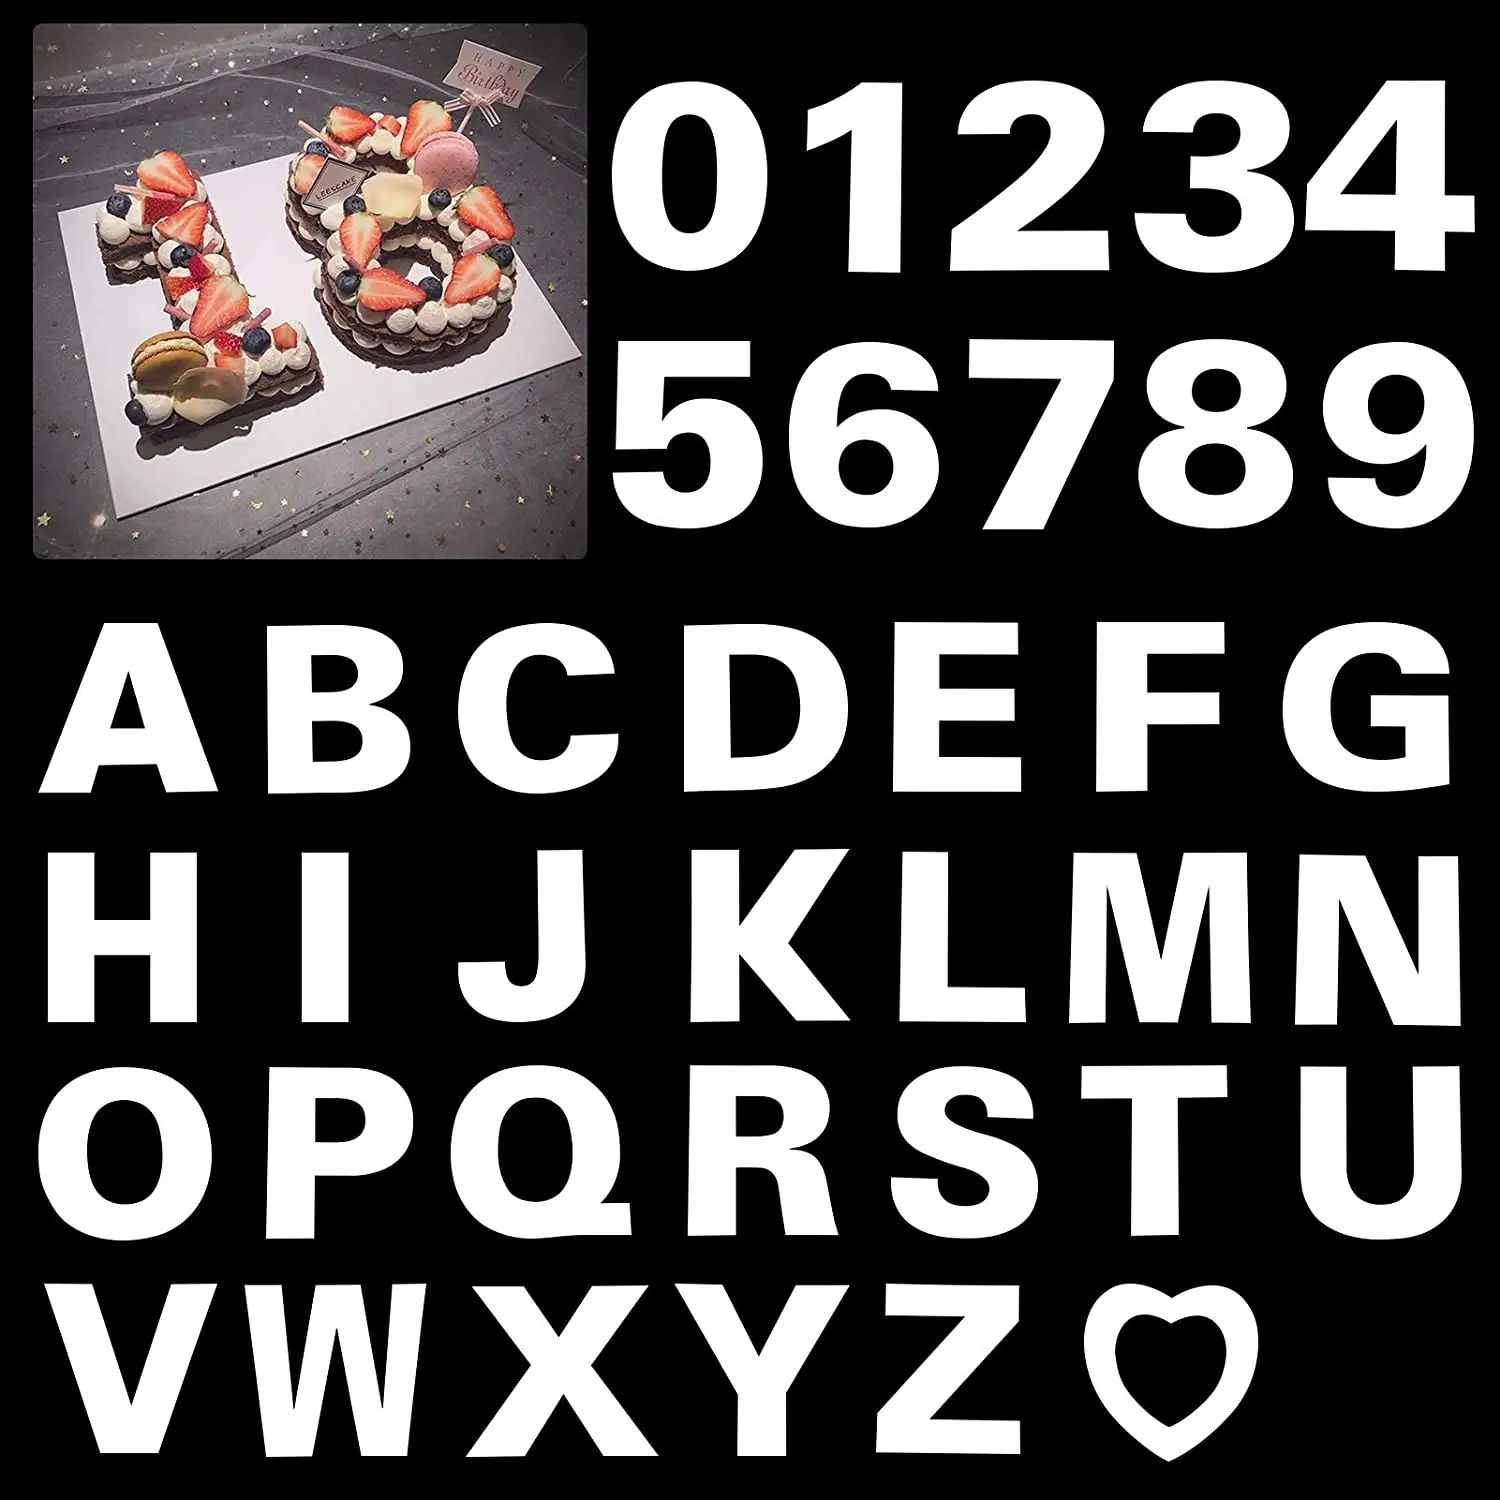 37pcs 8 zoll Alphabet Cake Stencils Letter Stencil A-Z 0-9 Number Cake Templates mit eine Heart Mold Cake Decorating Stencils